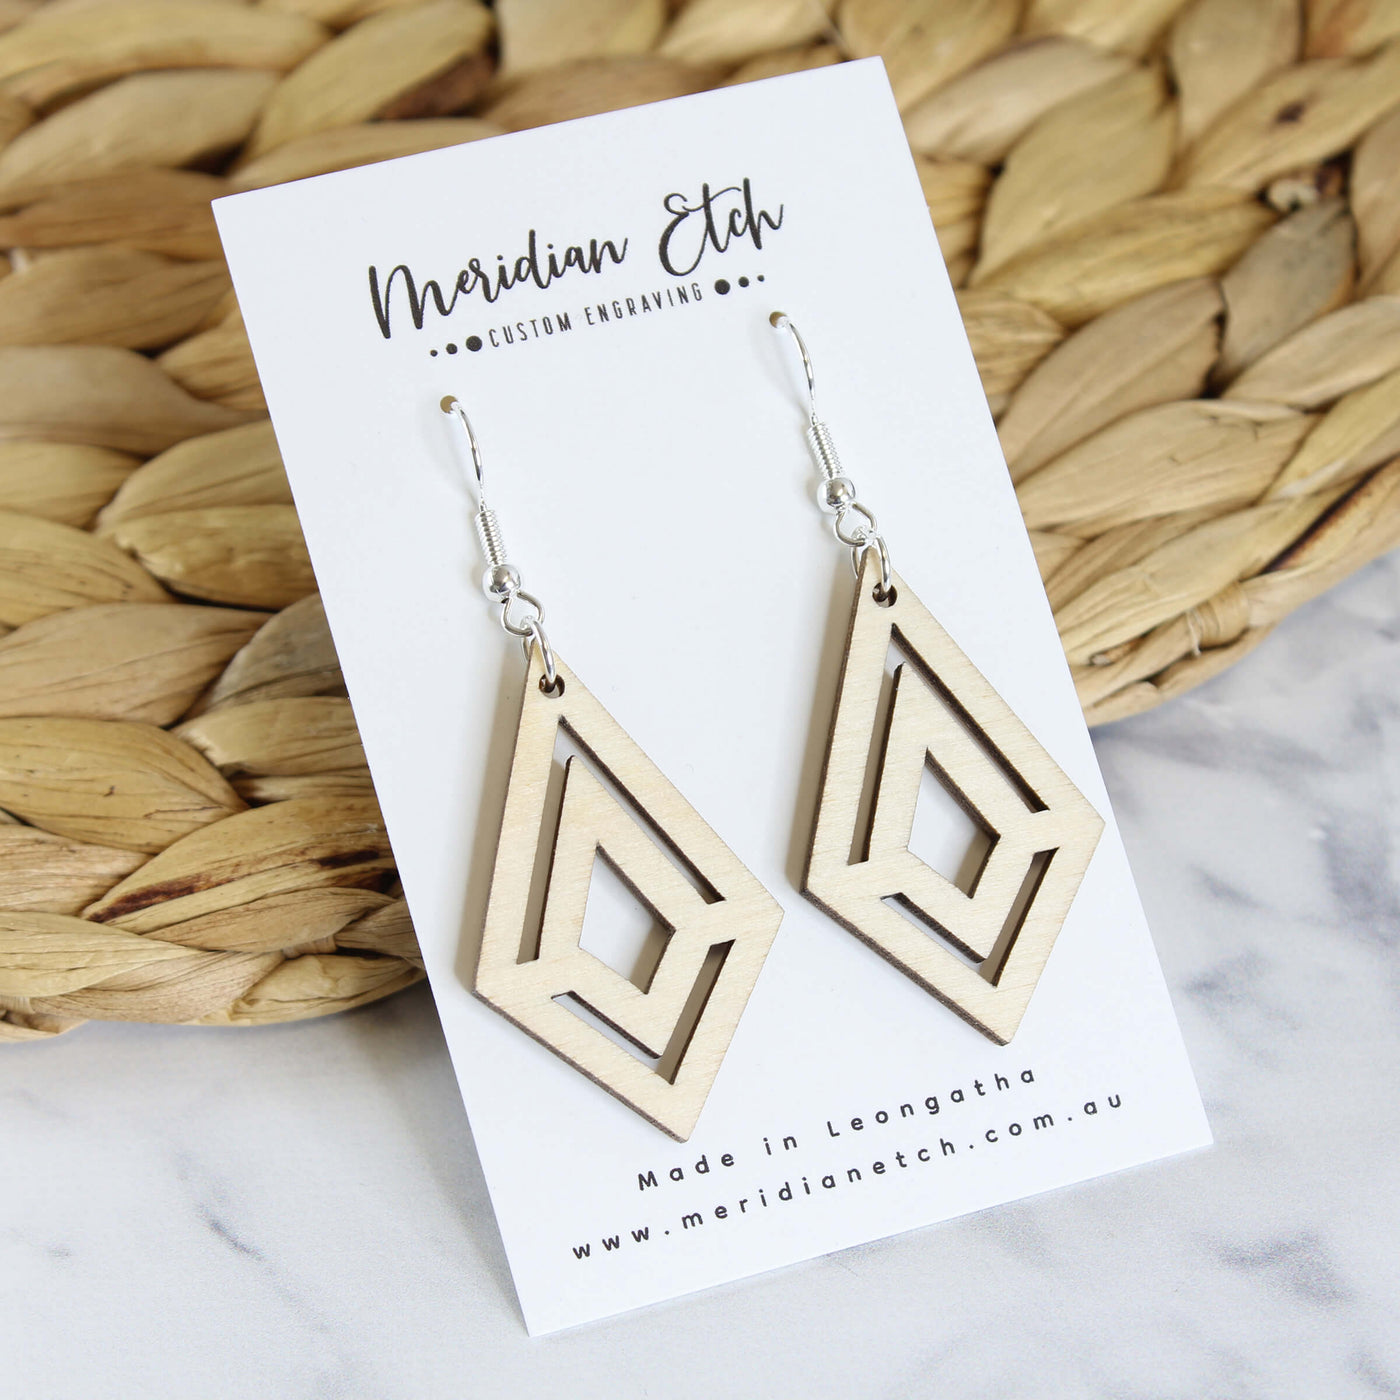 Wooden earrings - diamond design